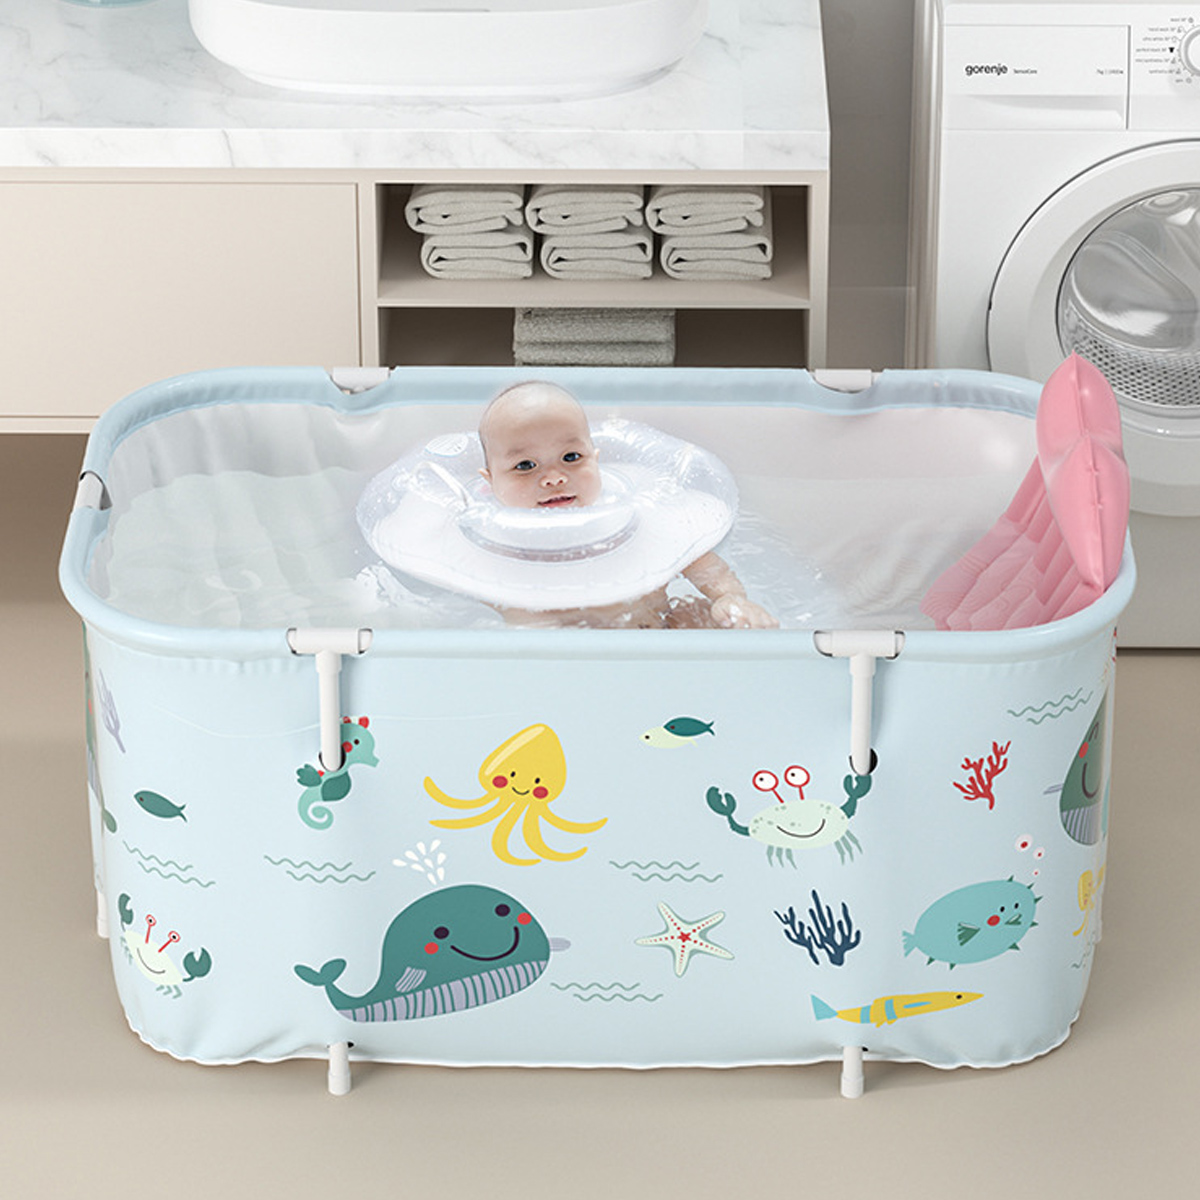 120x55cm-Large-Bathtub-Adult-Kids-Folding-Portable-Home-Sauna-Insulation-Bath-Bucket-1870045-10